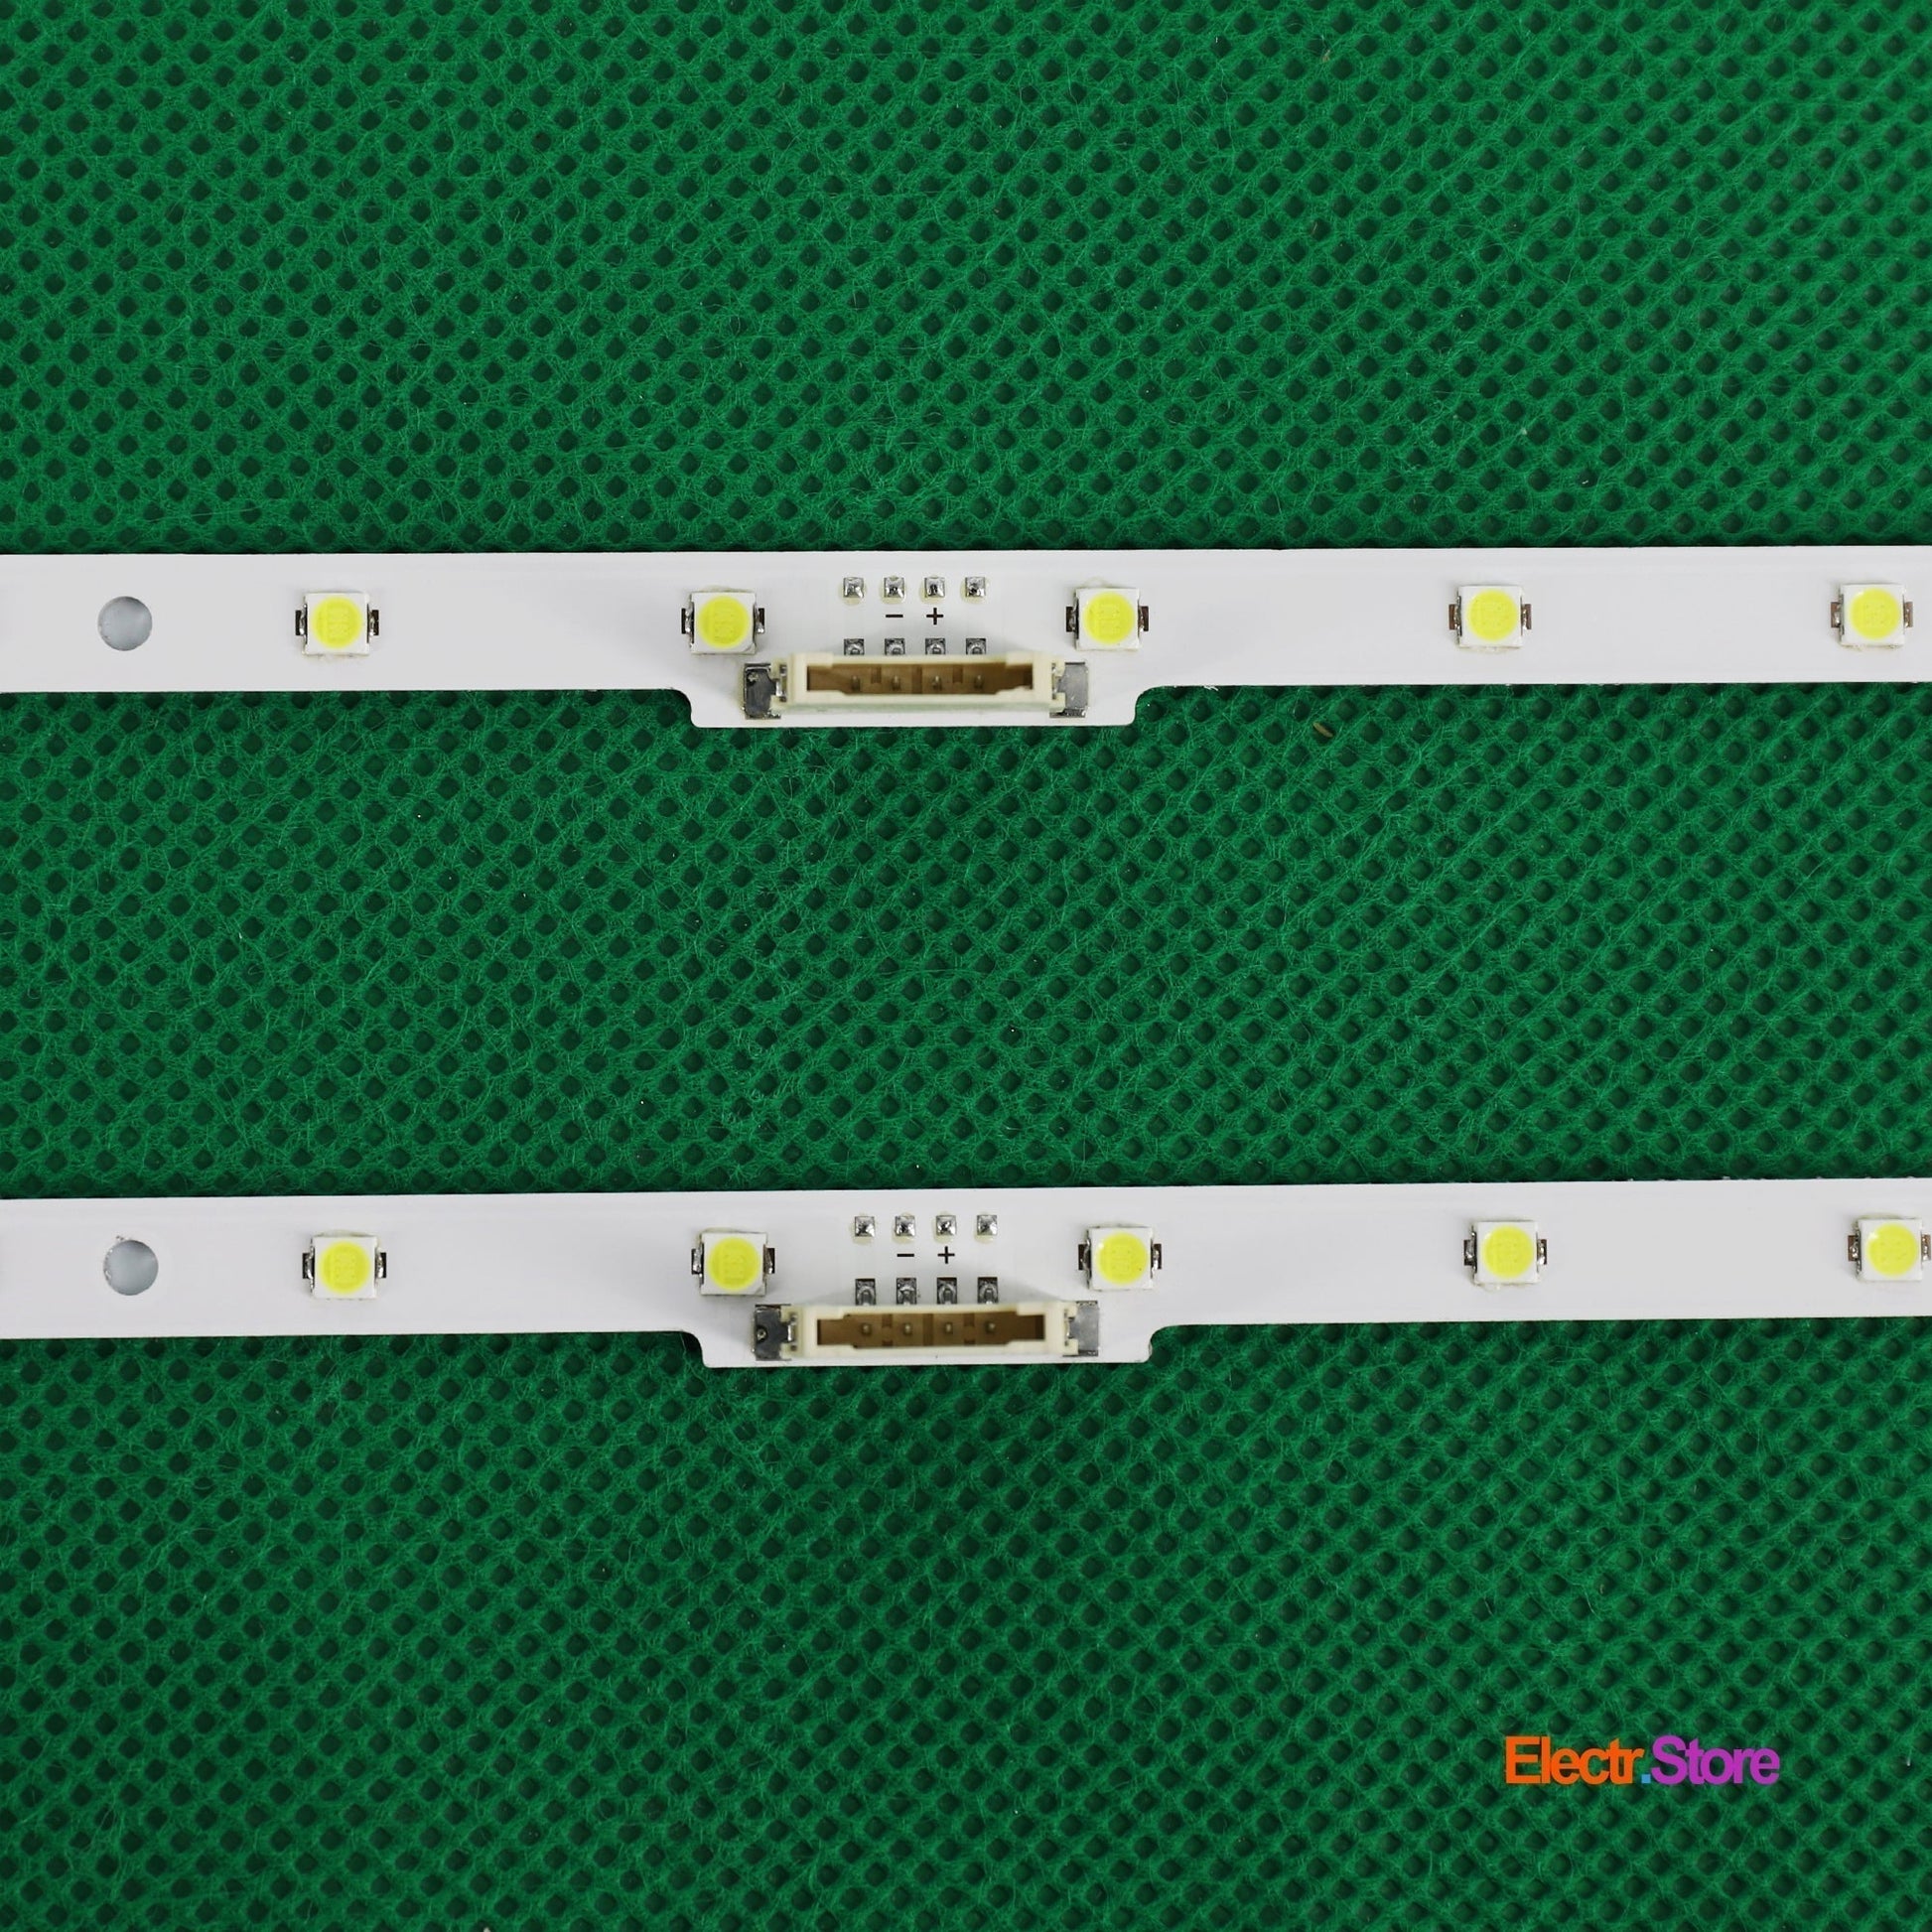 LED Backlight Strip Kits, AOT_40_NU7100F, LM41-00550A, LM41-00549A, BN96-45955A, 2X23LED (2 pcs/kit), for TV 40" SAMSUNG: UE40NU7190SXXN, UE40NU7190UXZG, UE40NU7190UXZT, UE40NU7192UXXH 40" LED Backlights LM41-00550A Samsung Electr.Store